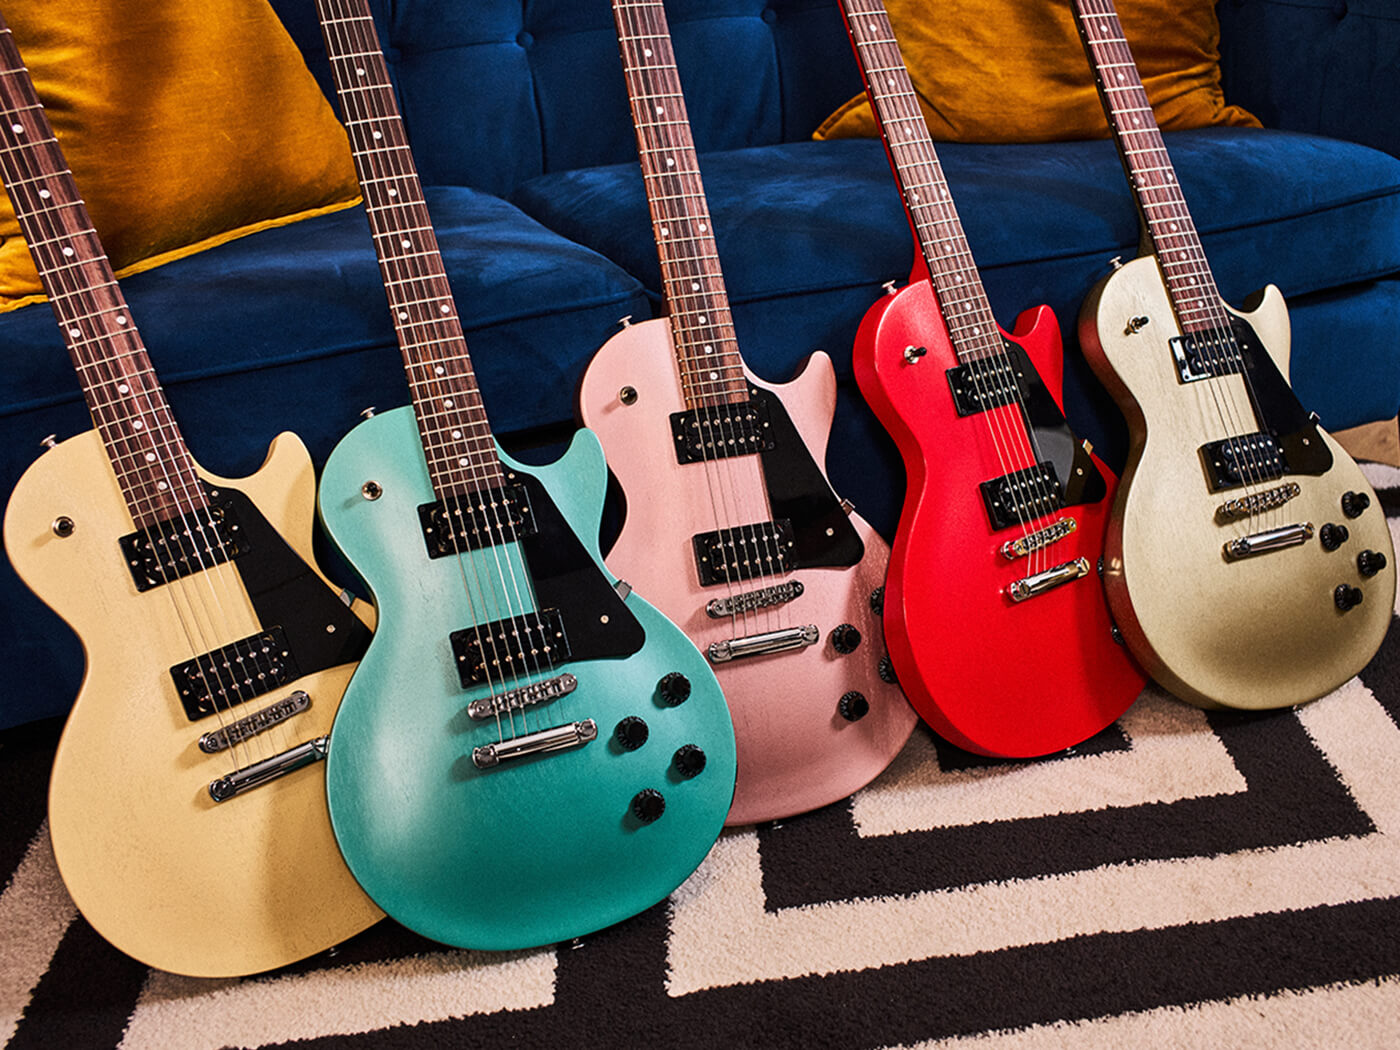 Gibson Les Paul Modern Lite guitars in various colourways